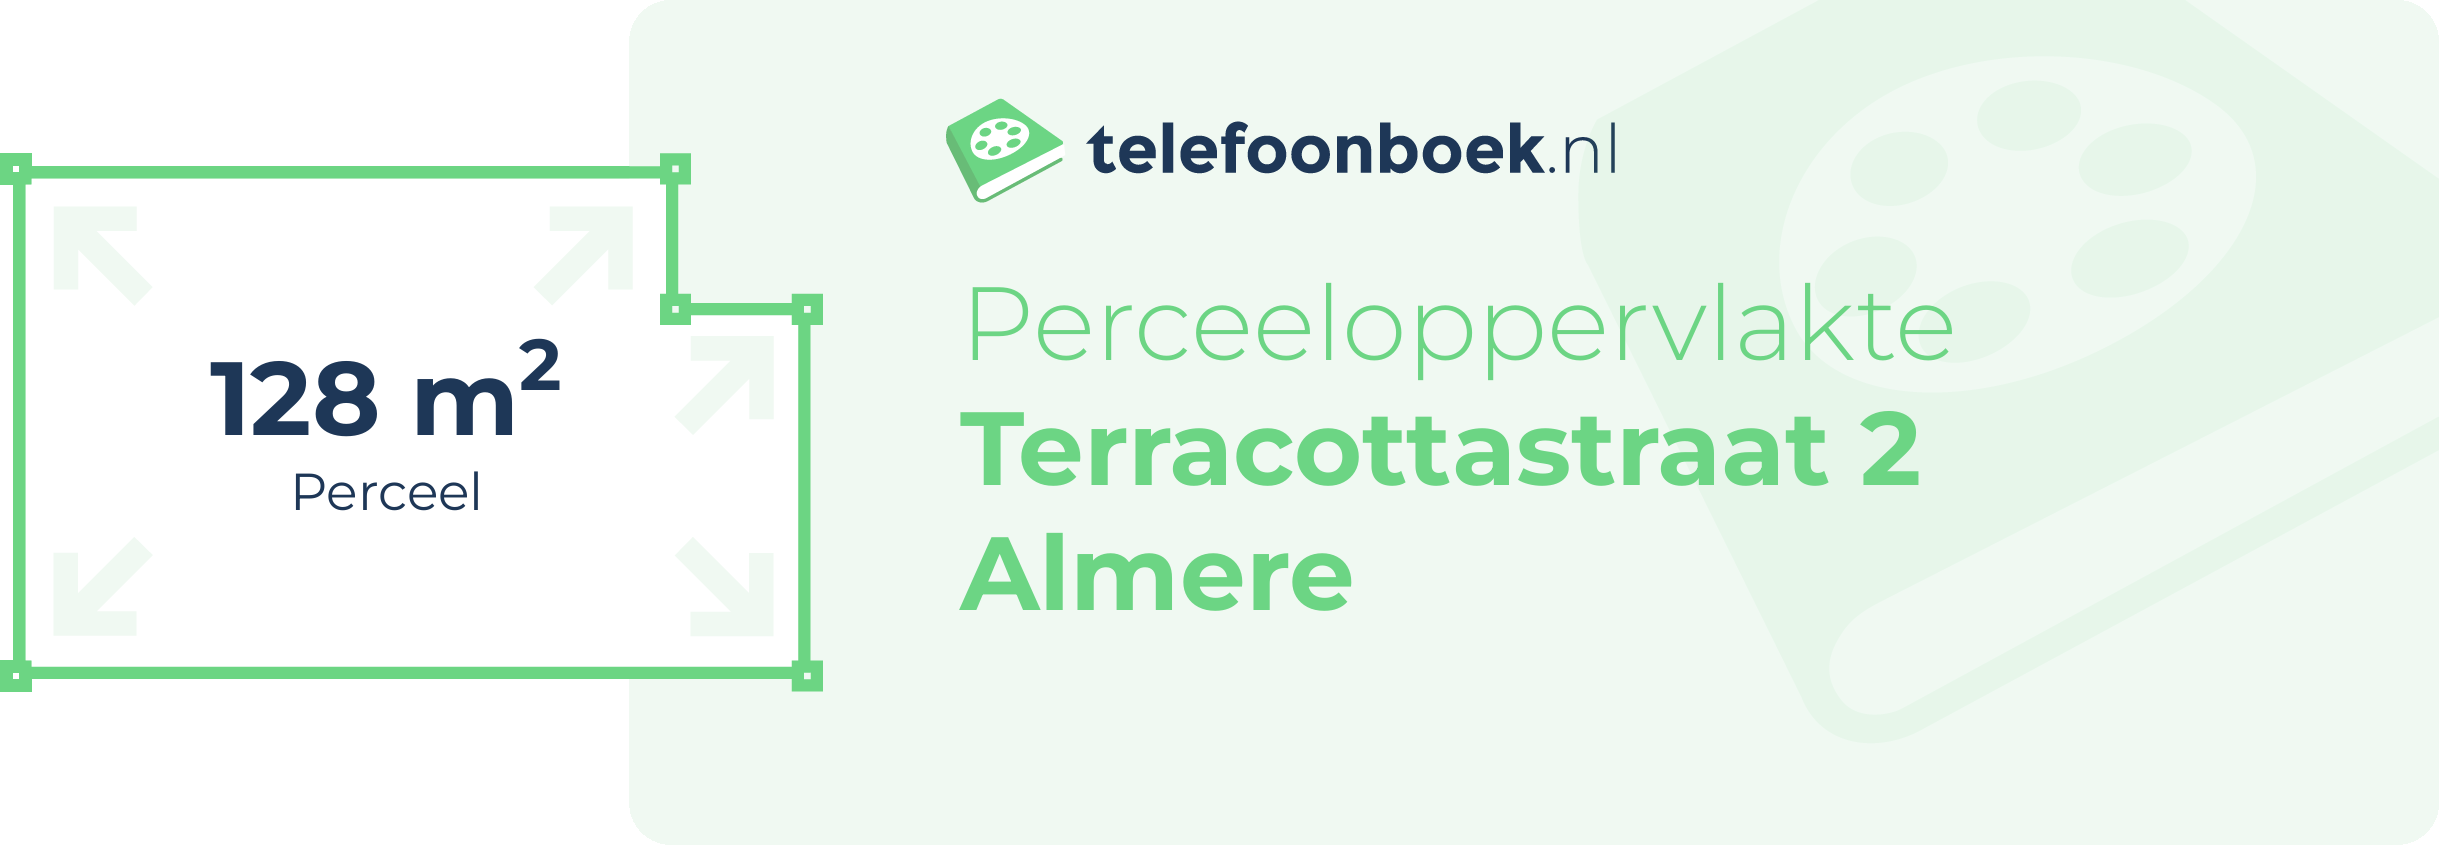 Perceeloppervlakte Terracottastraat 2 Almere